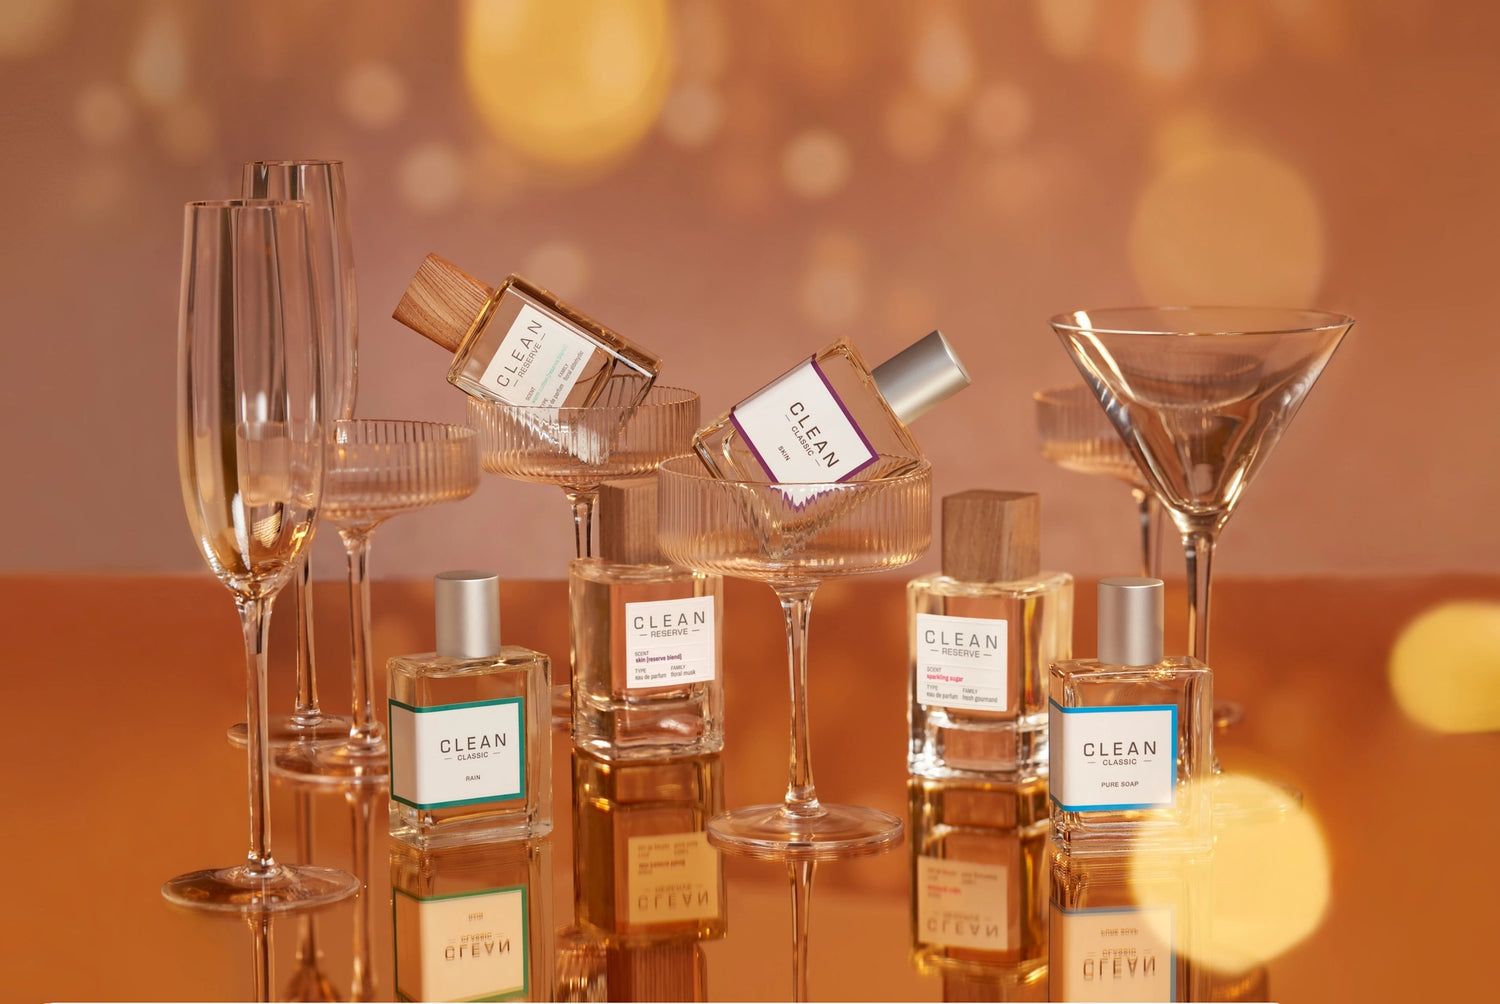 Fragrances and festive glasses